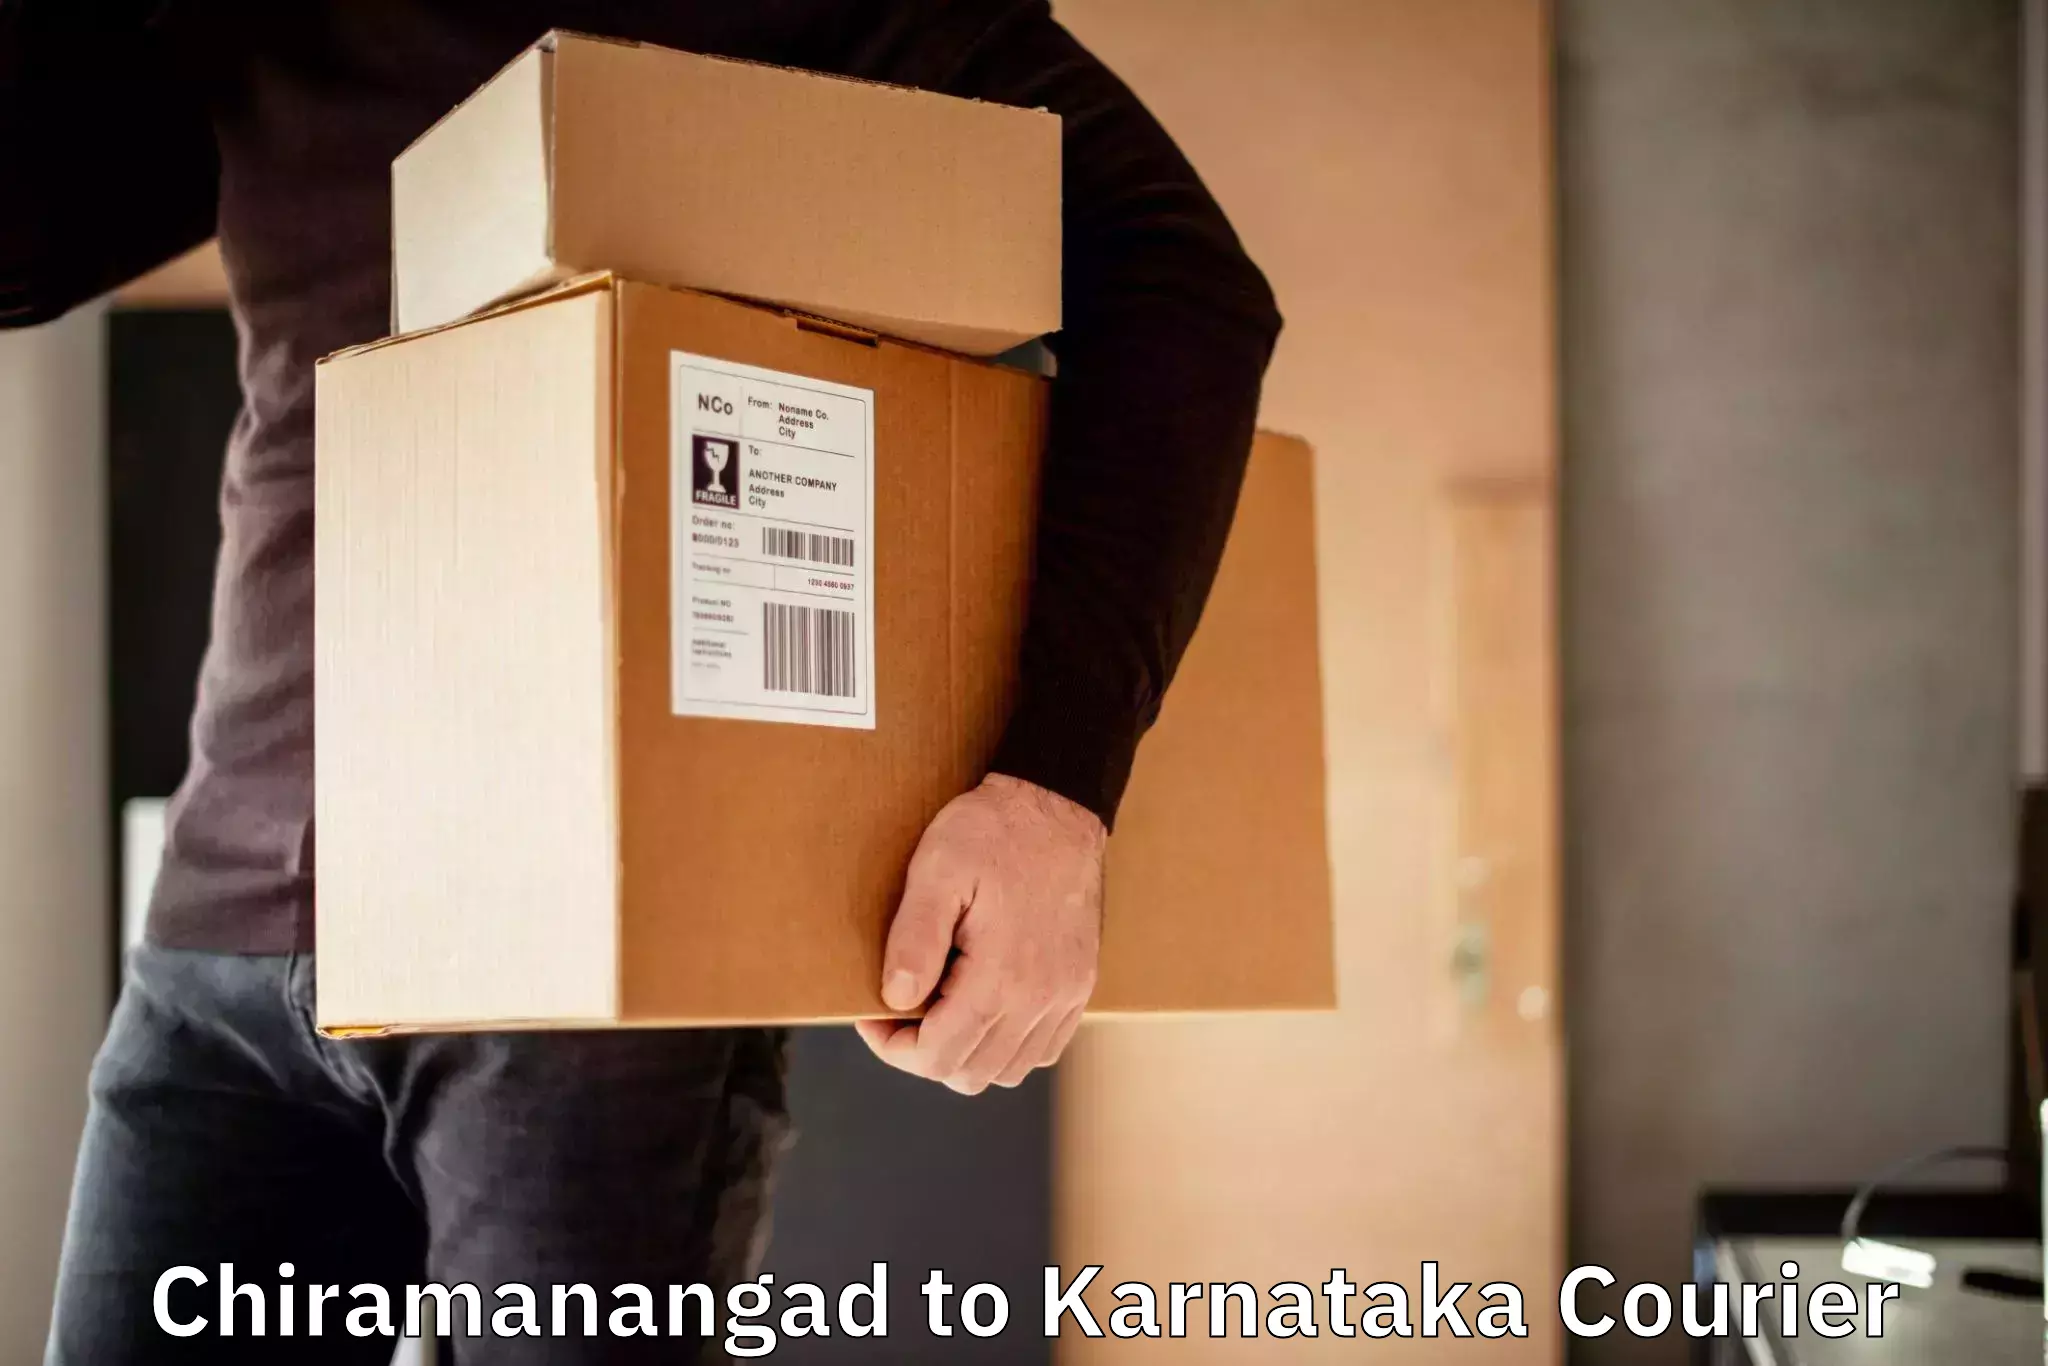 Global courier networks Chiramanangad to Karnataka